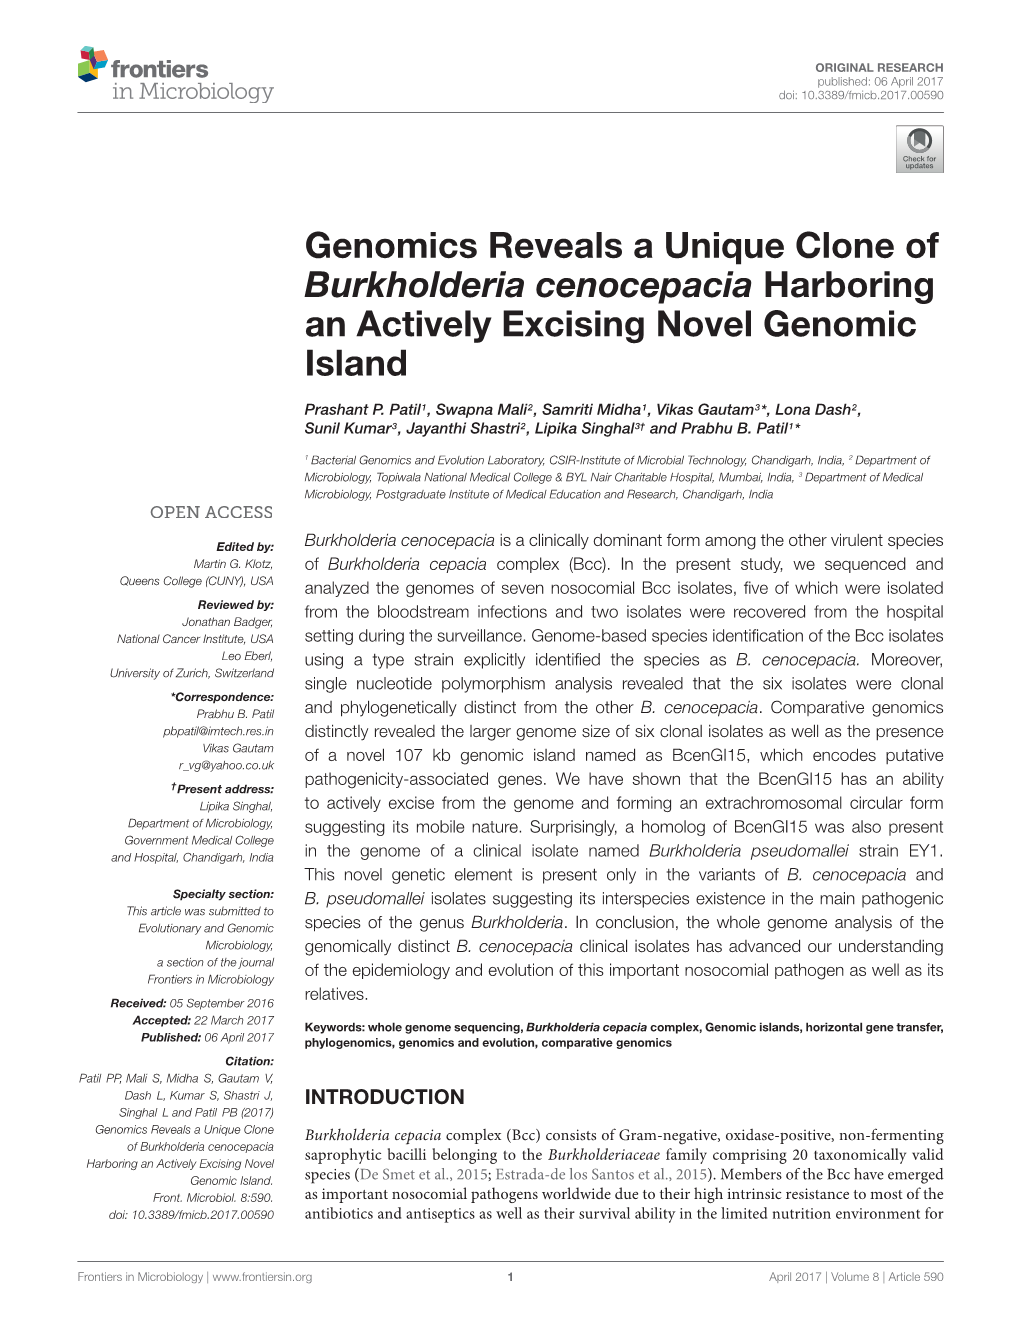 Genomics Reveals a Unique Clone of Burkholderia Cenocepacia Harboring an Actively Excising Novel Genomic Island